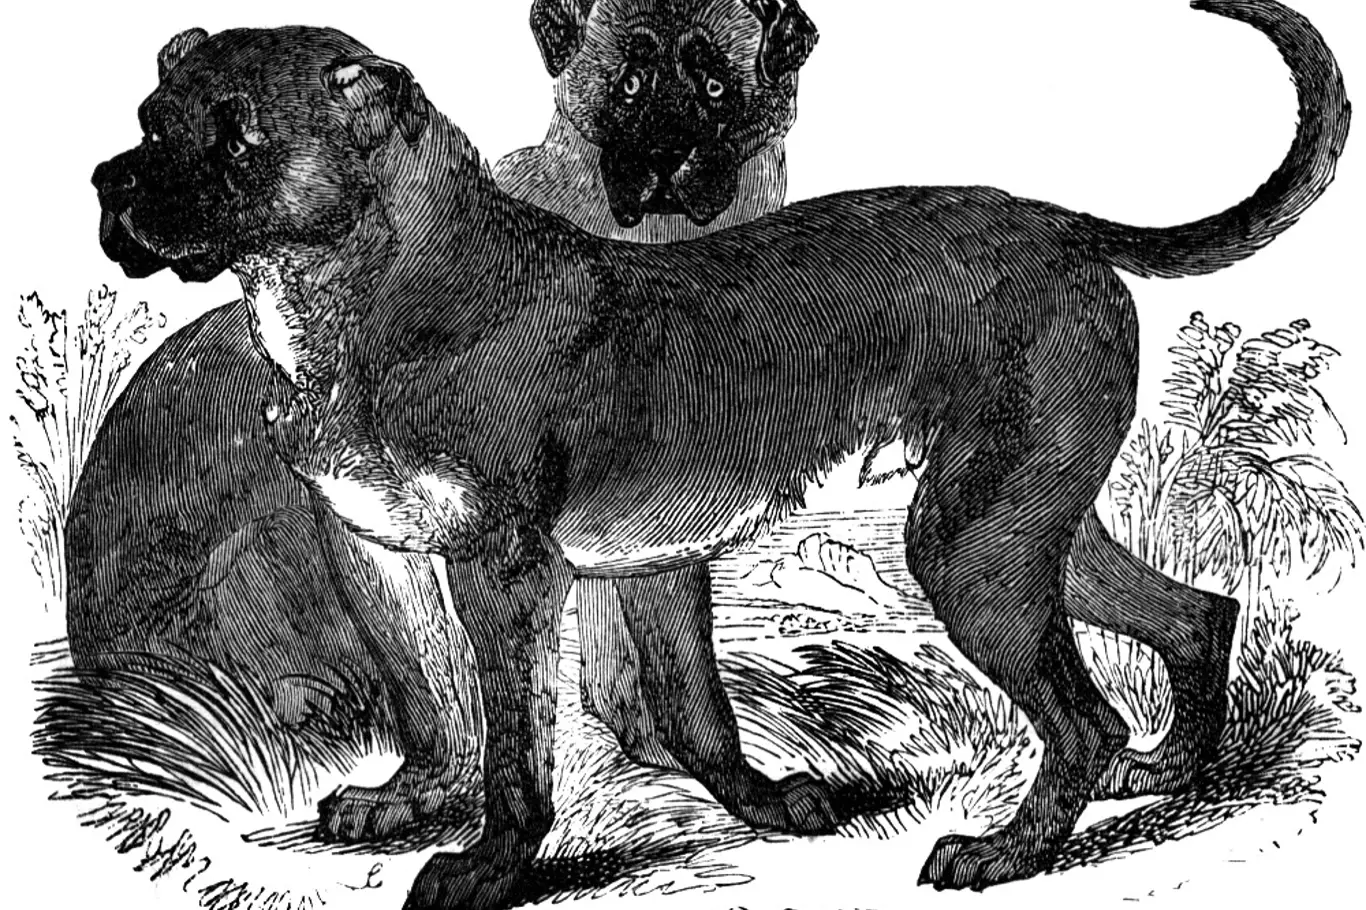 Cuban Mastiff, The Animal Kingdom Illustrated , AJ Johnson & Co., New York, 1885